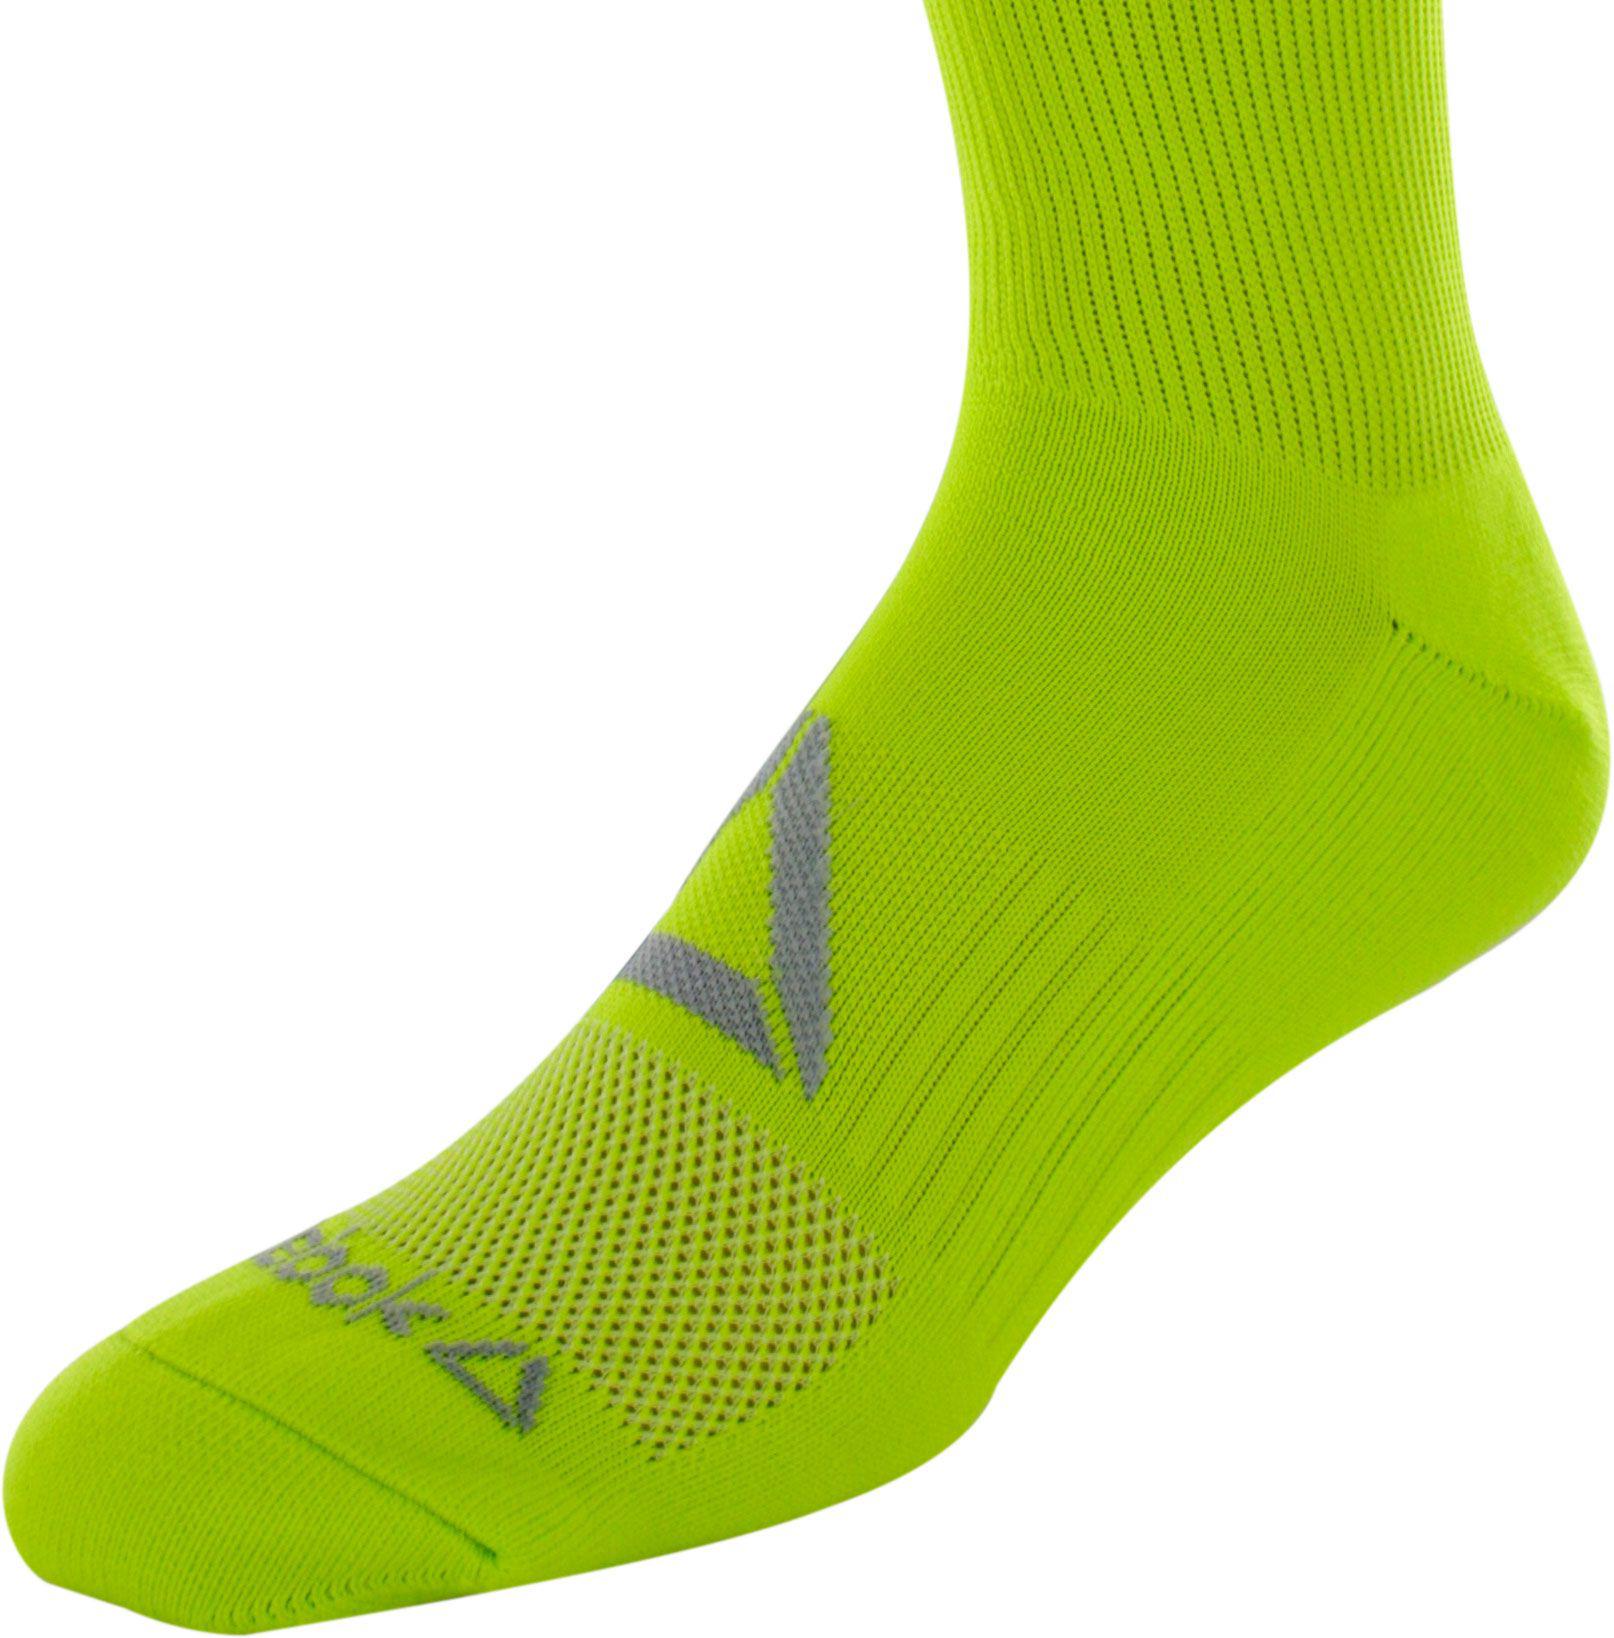 Reebok All Sport Athletic Knee High Socks in Green for Men - Lyst